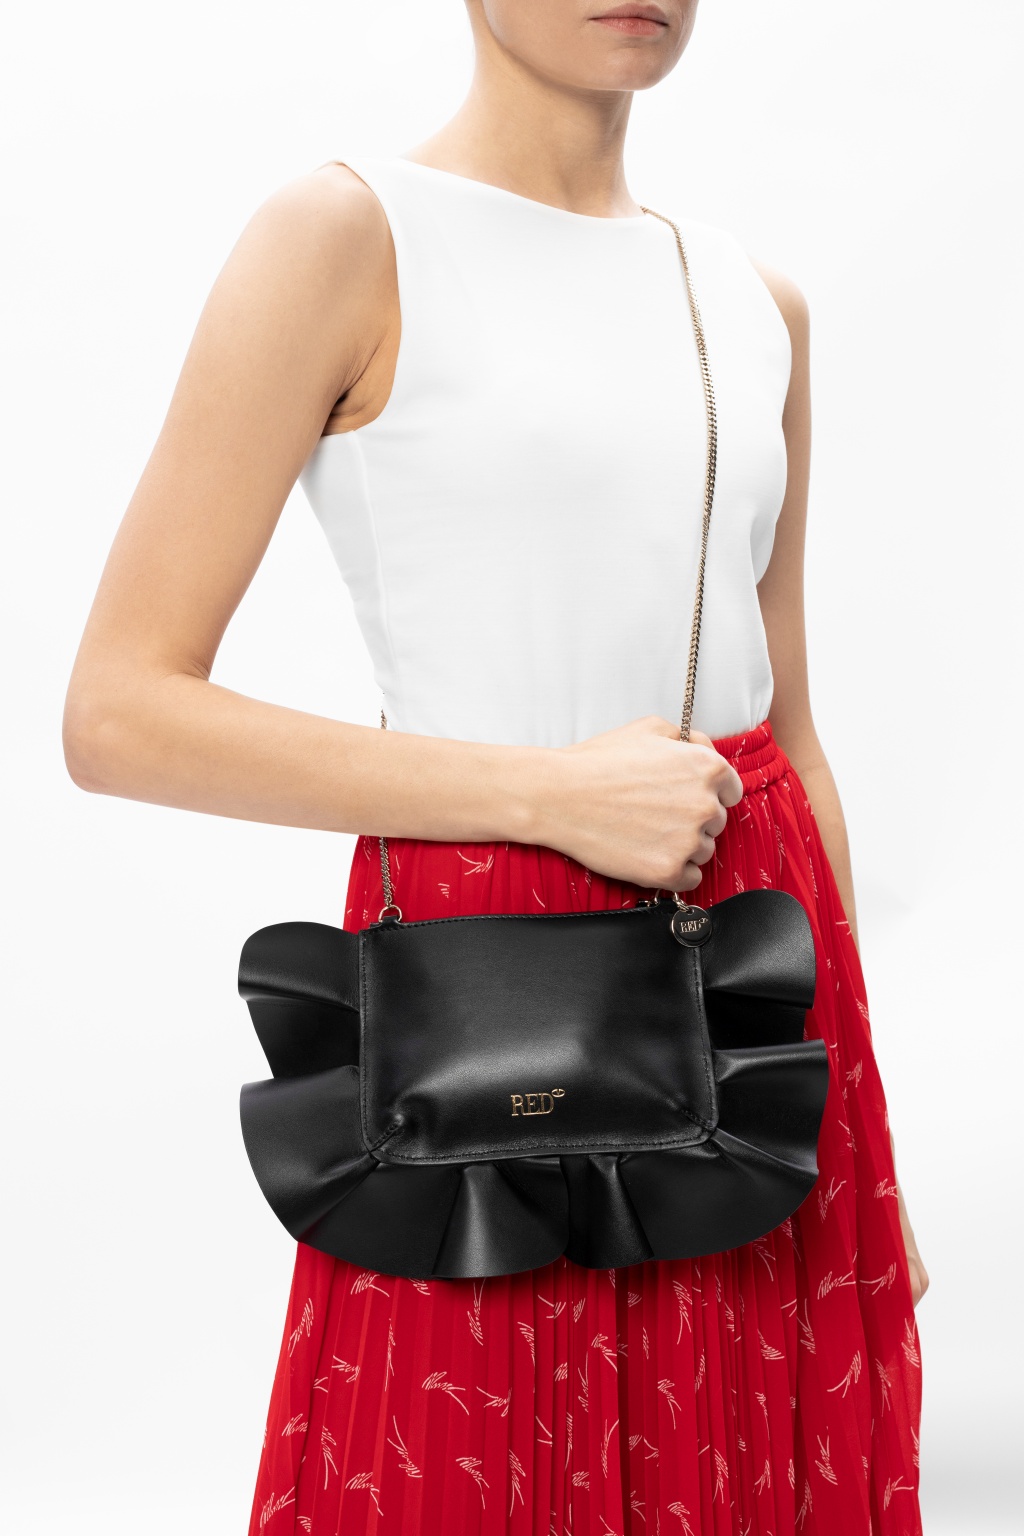 Red Valentino 'Rock Ruffles' shoulder bag | Women's Bags | Vitkac